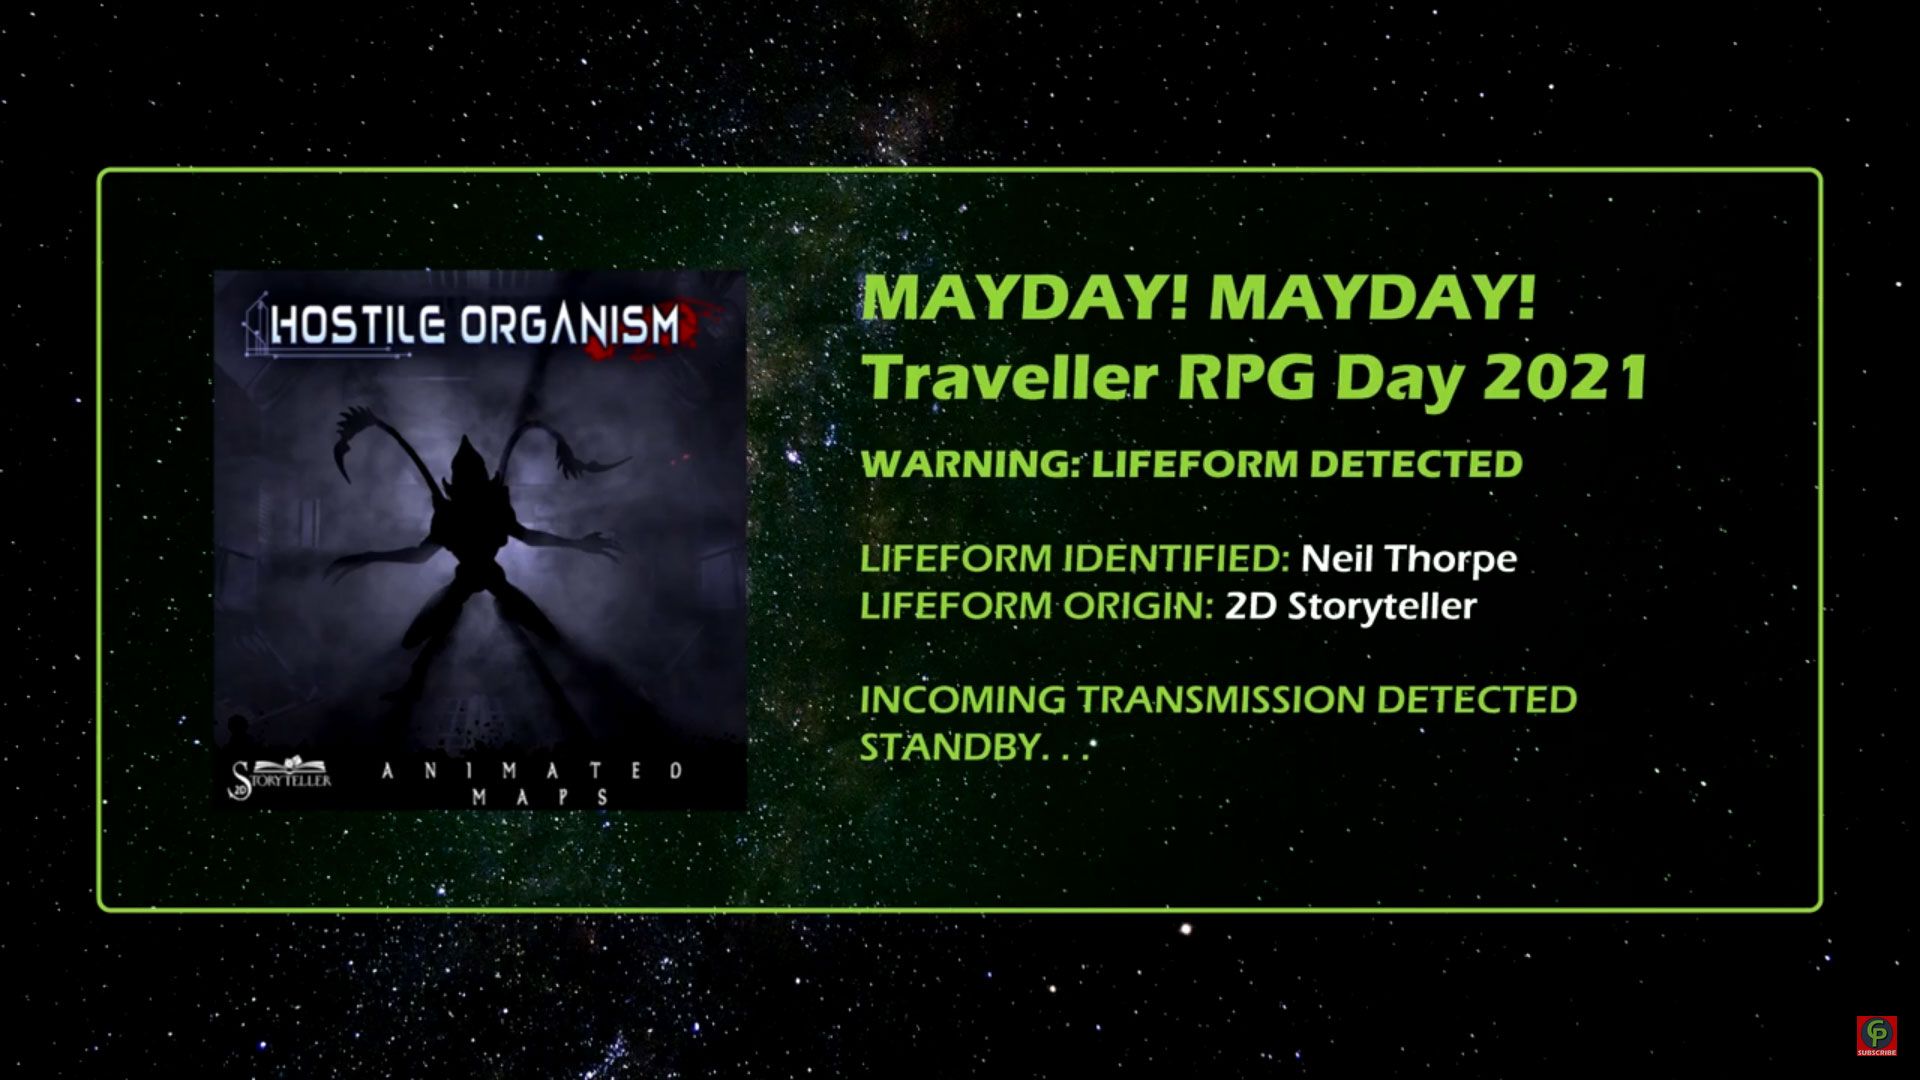 neil thorpe of 2d storyteller Interview Traveller RPG Mayday 2021 title